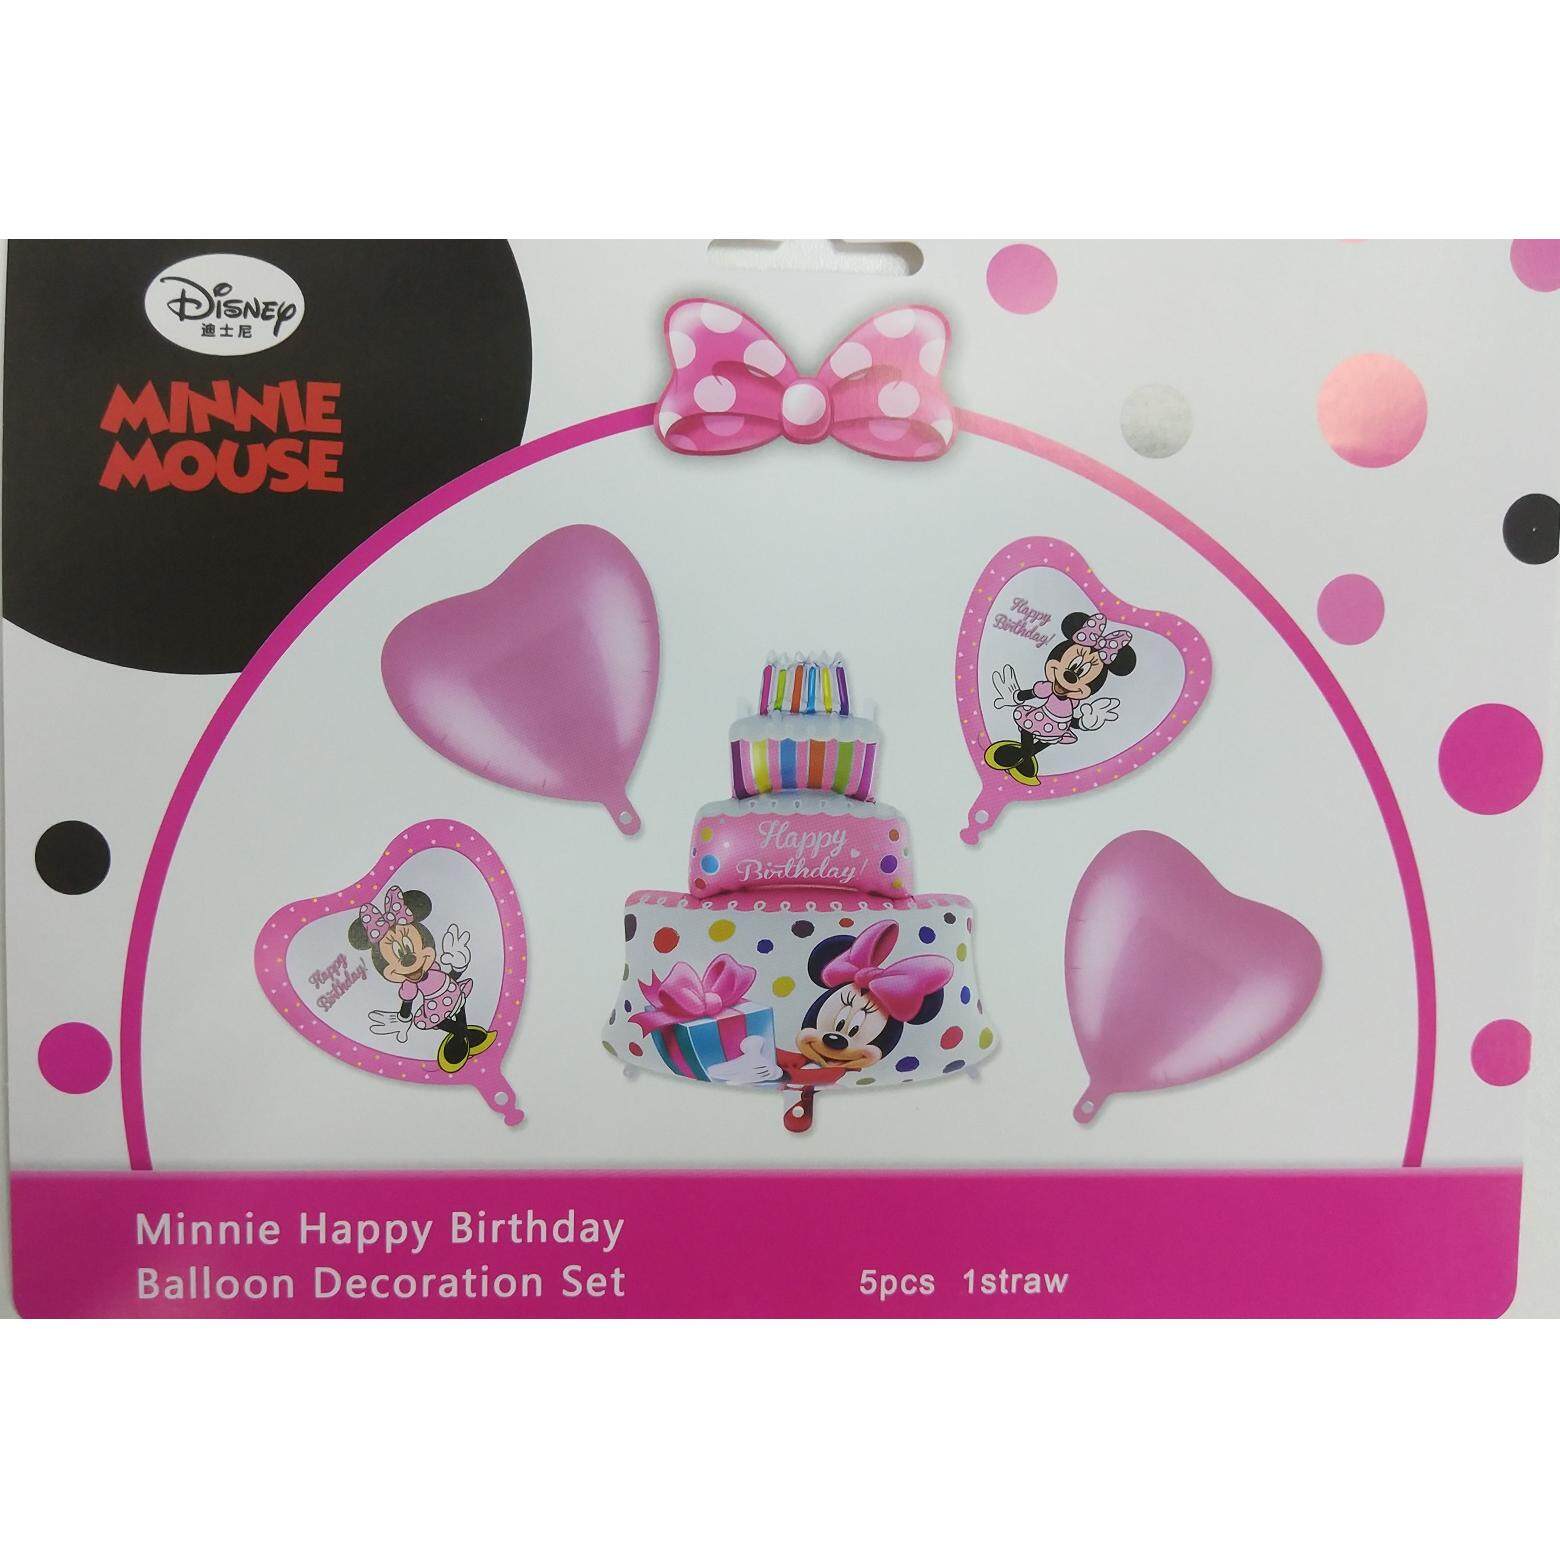 [IX] DISNEY Minnie Happy Birthday Foil Balloons Sets toys for girls